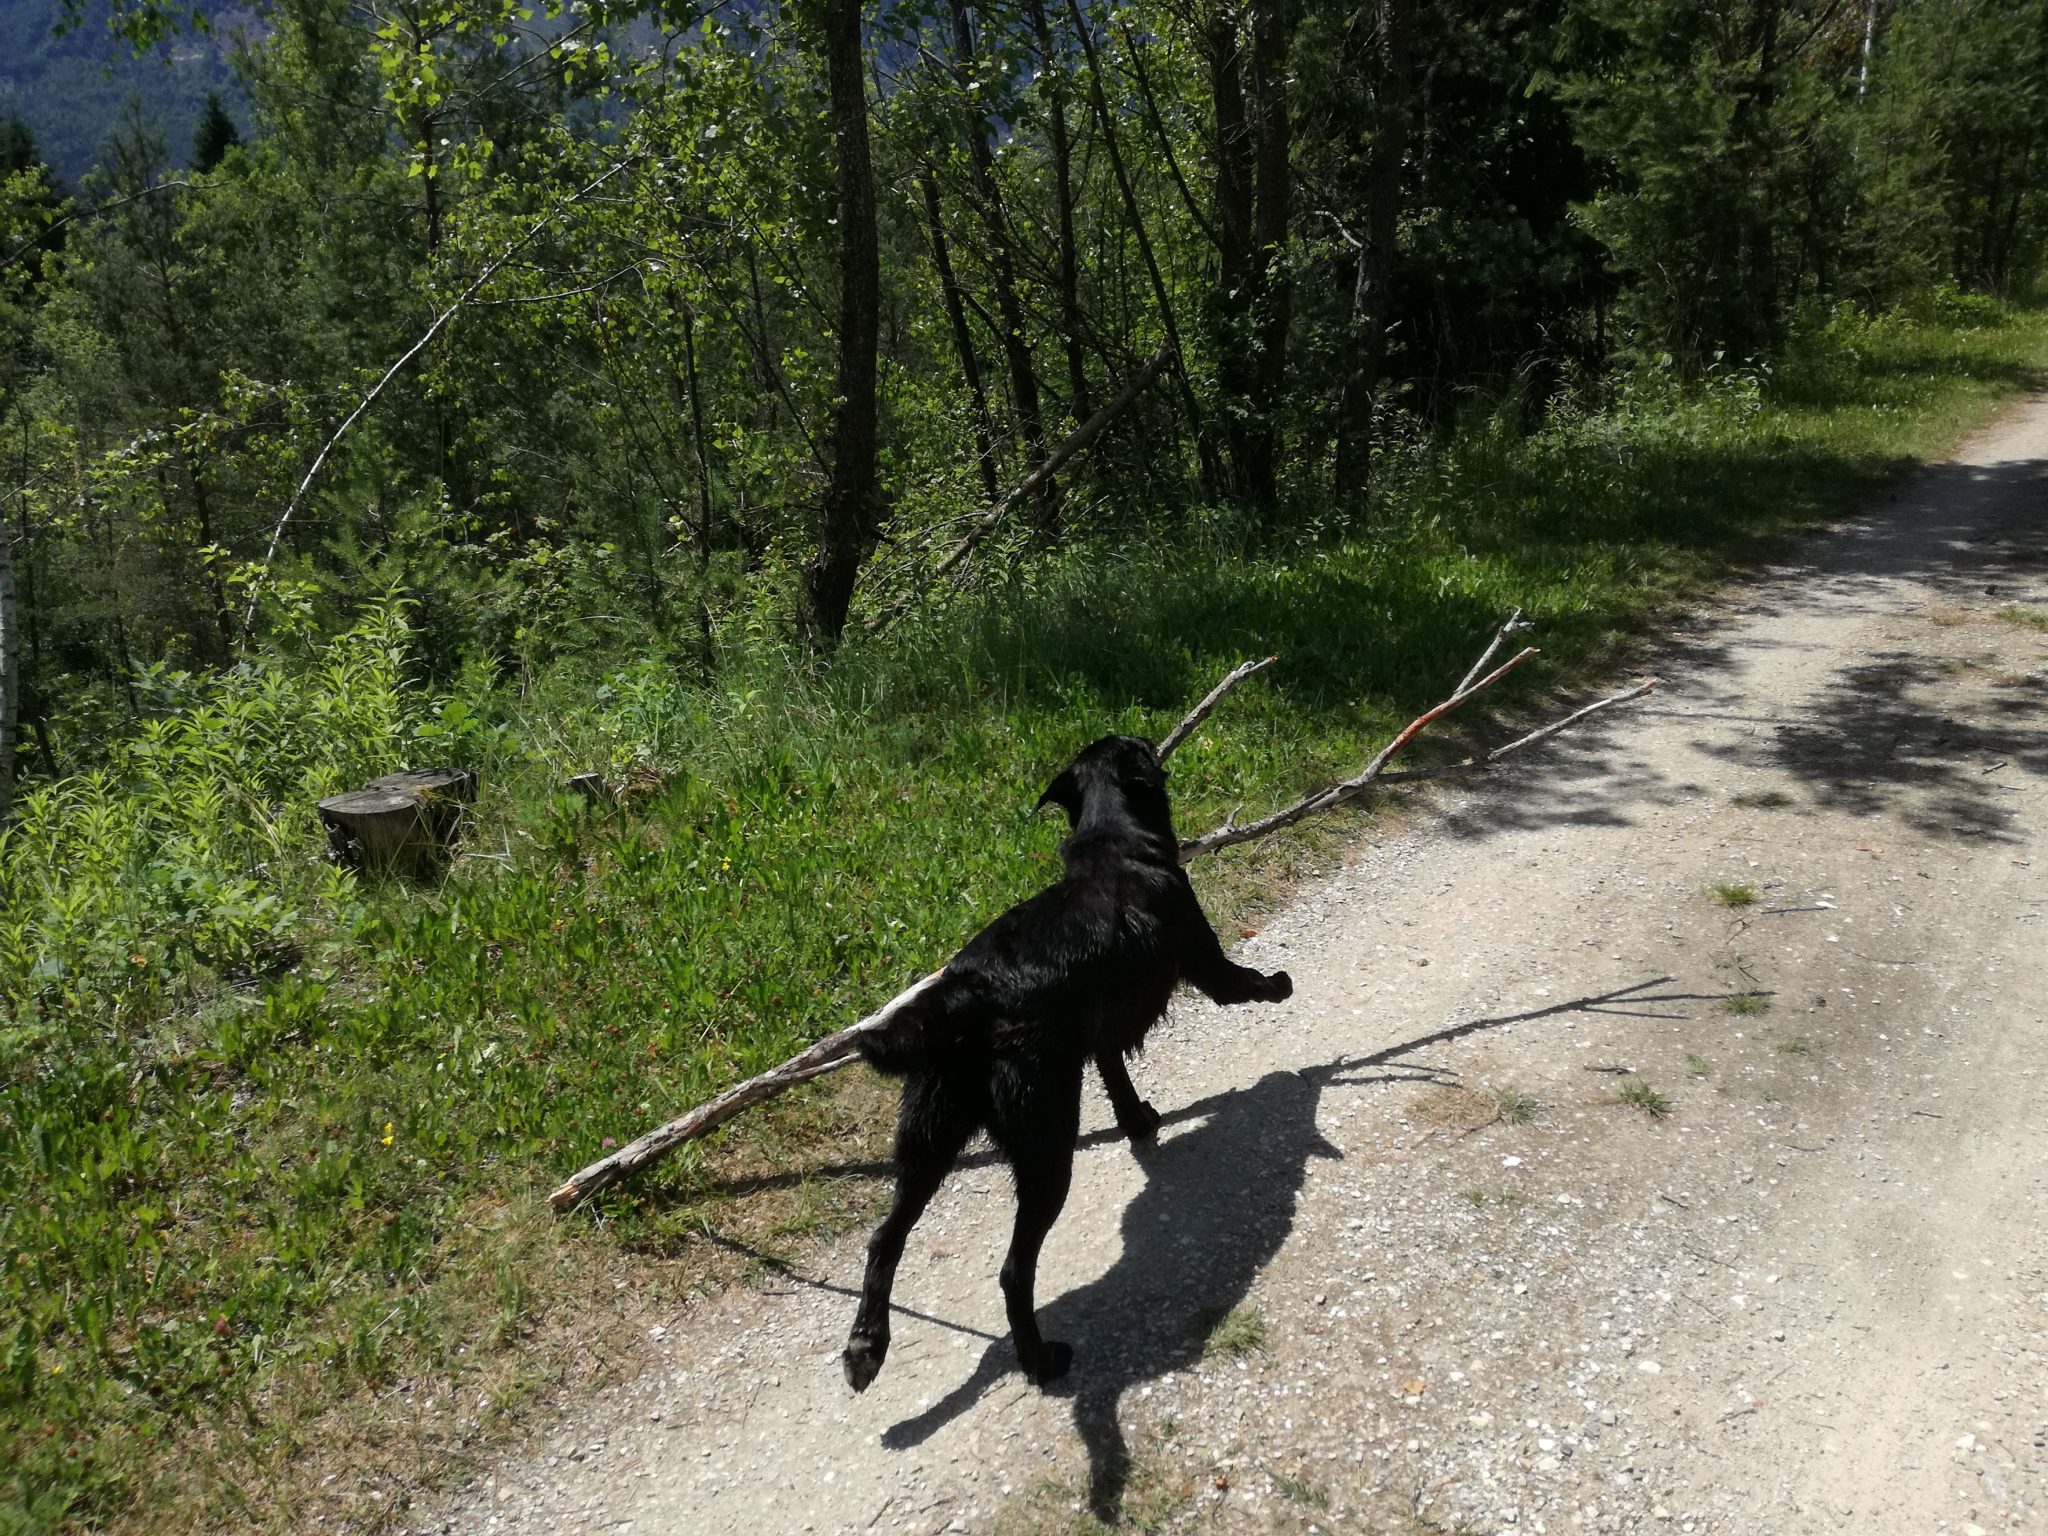 Camping Rosental Roz Camping mit Hund in Kärnten Jack auf Reisen